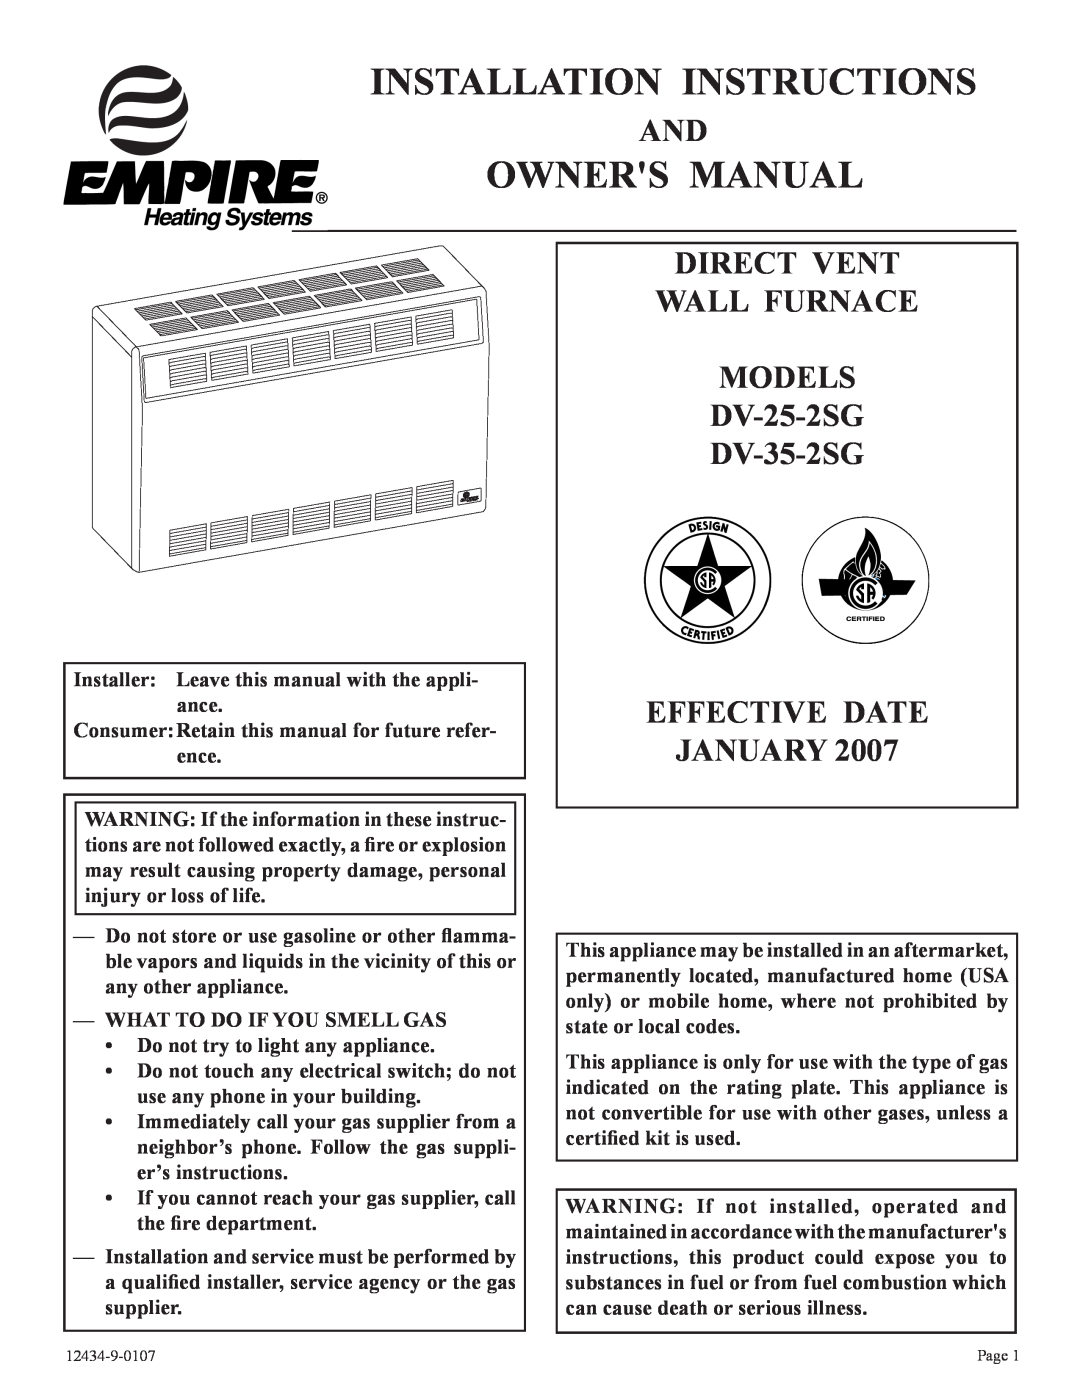 Empire Comfort Systems DV-35-2SG installation instructions Installation Instructions, Effective Date, January 